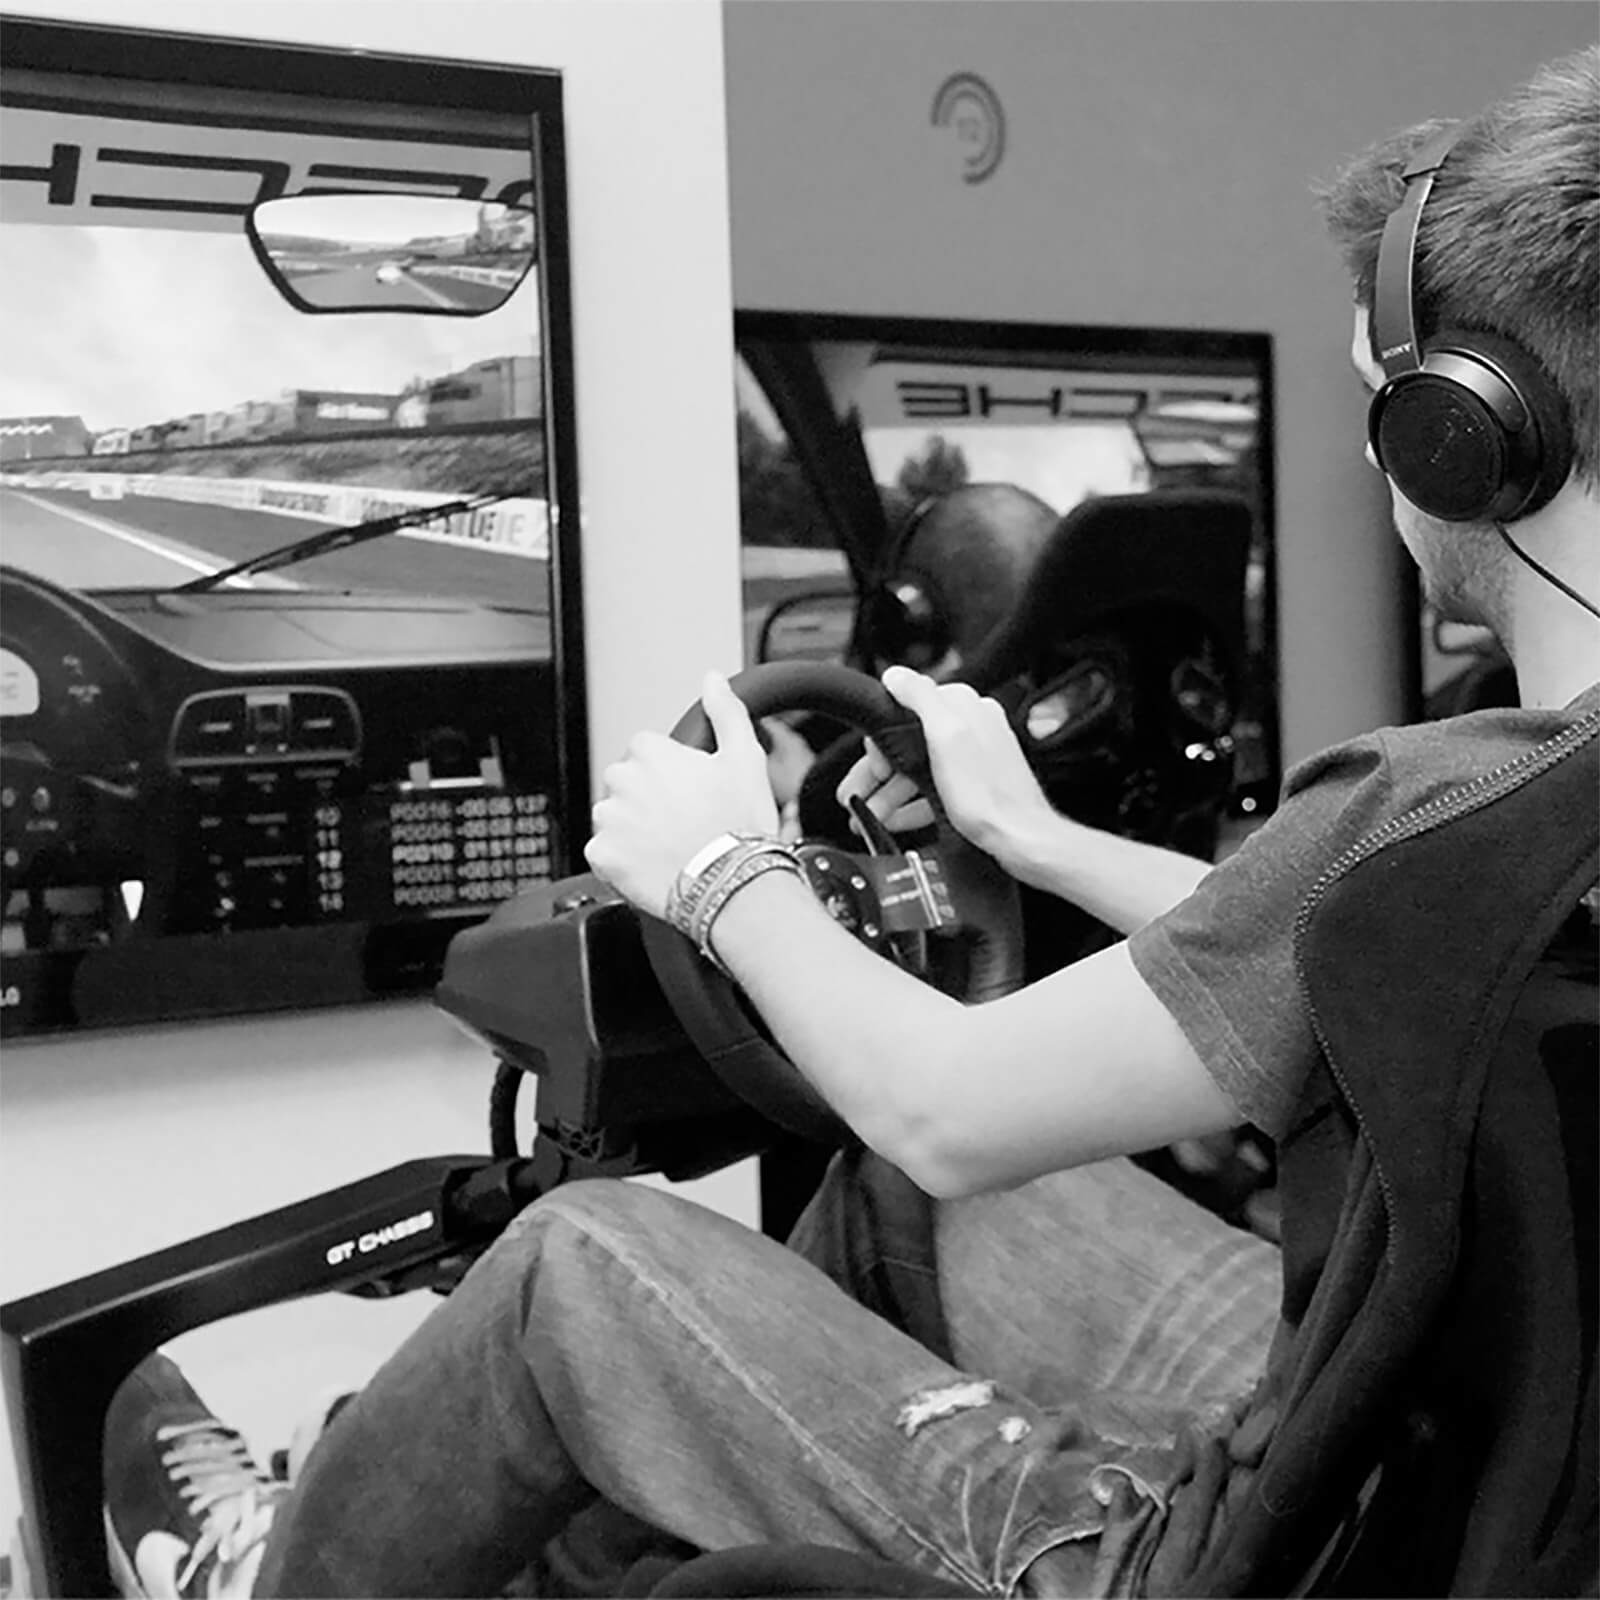 F1 Grand Prix Simulator Race Experience